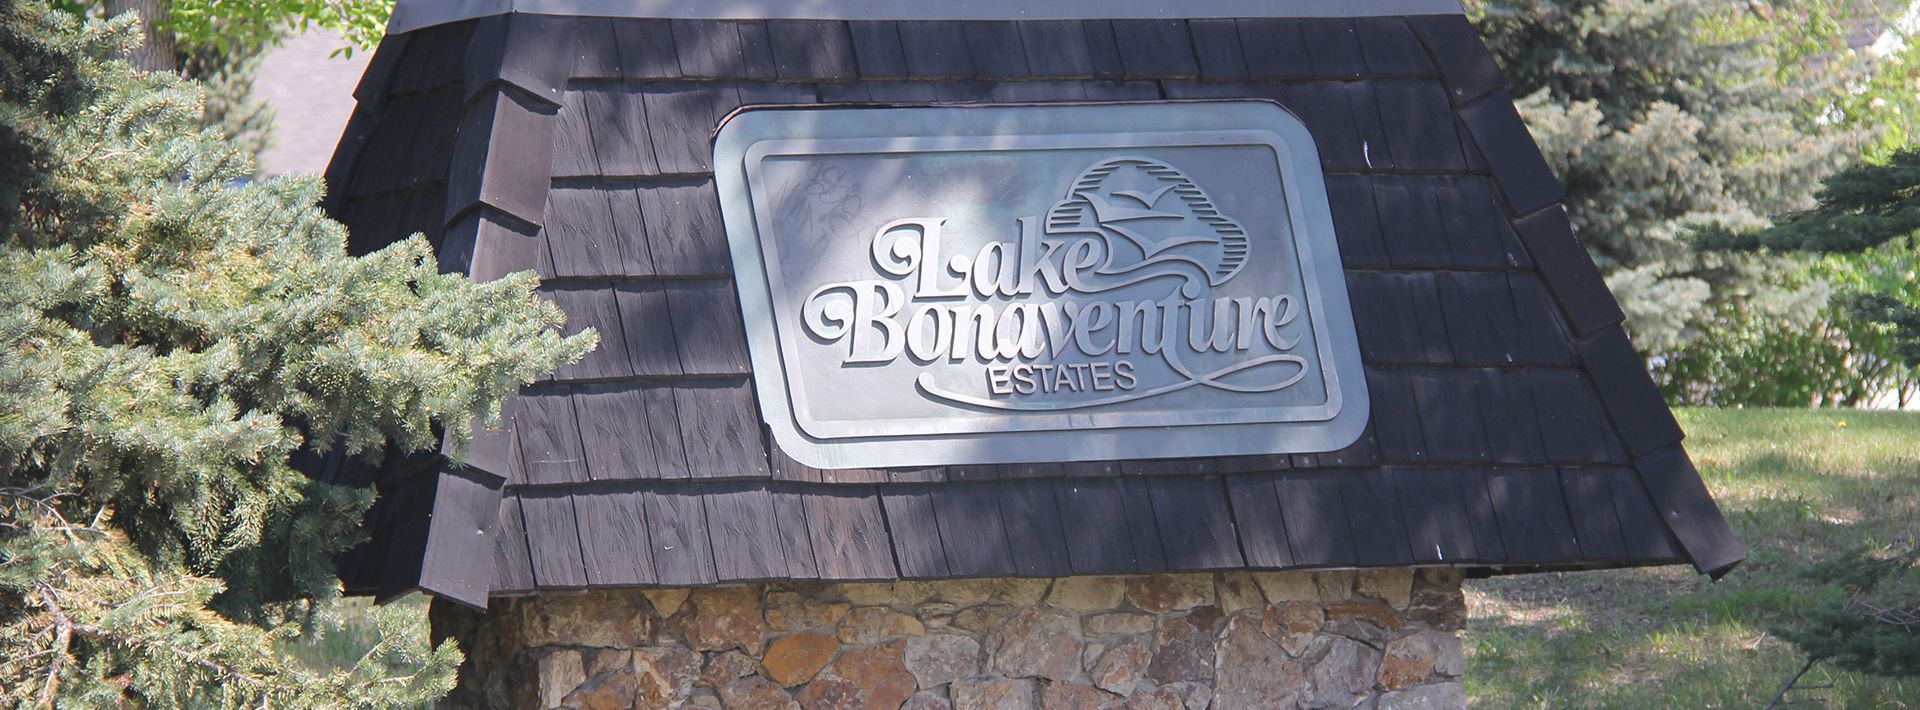 A sign that says Lake Bonaventure estates on it